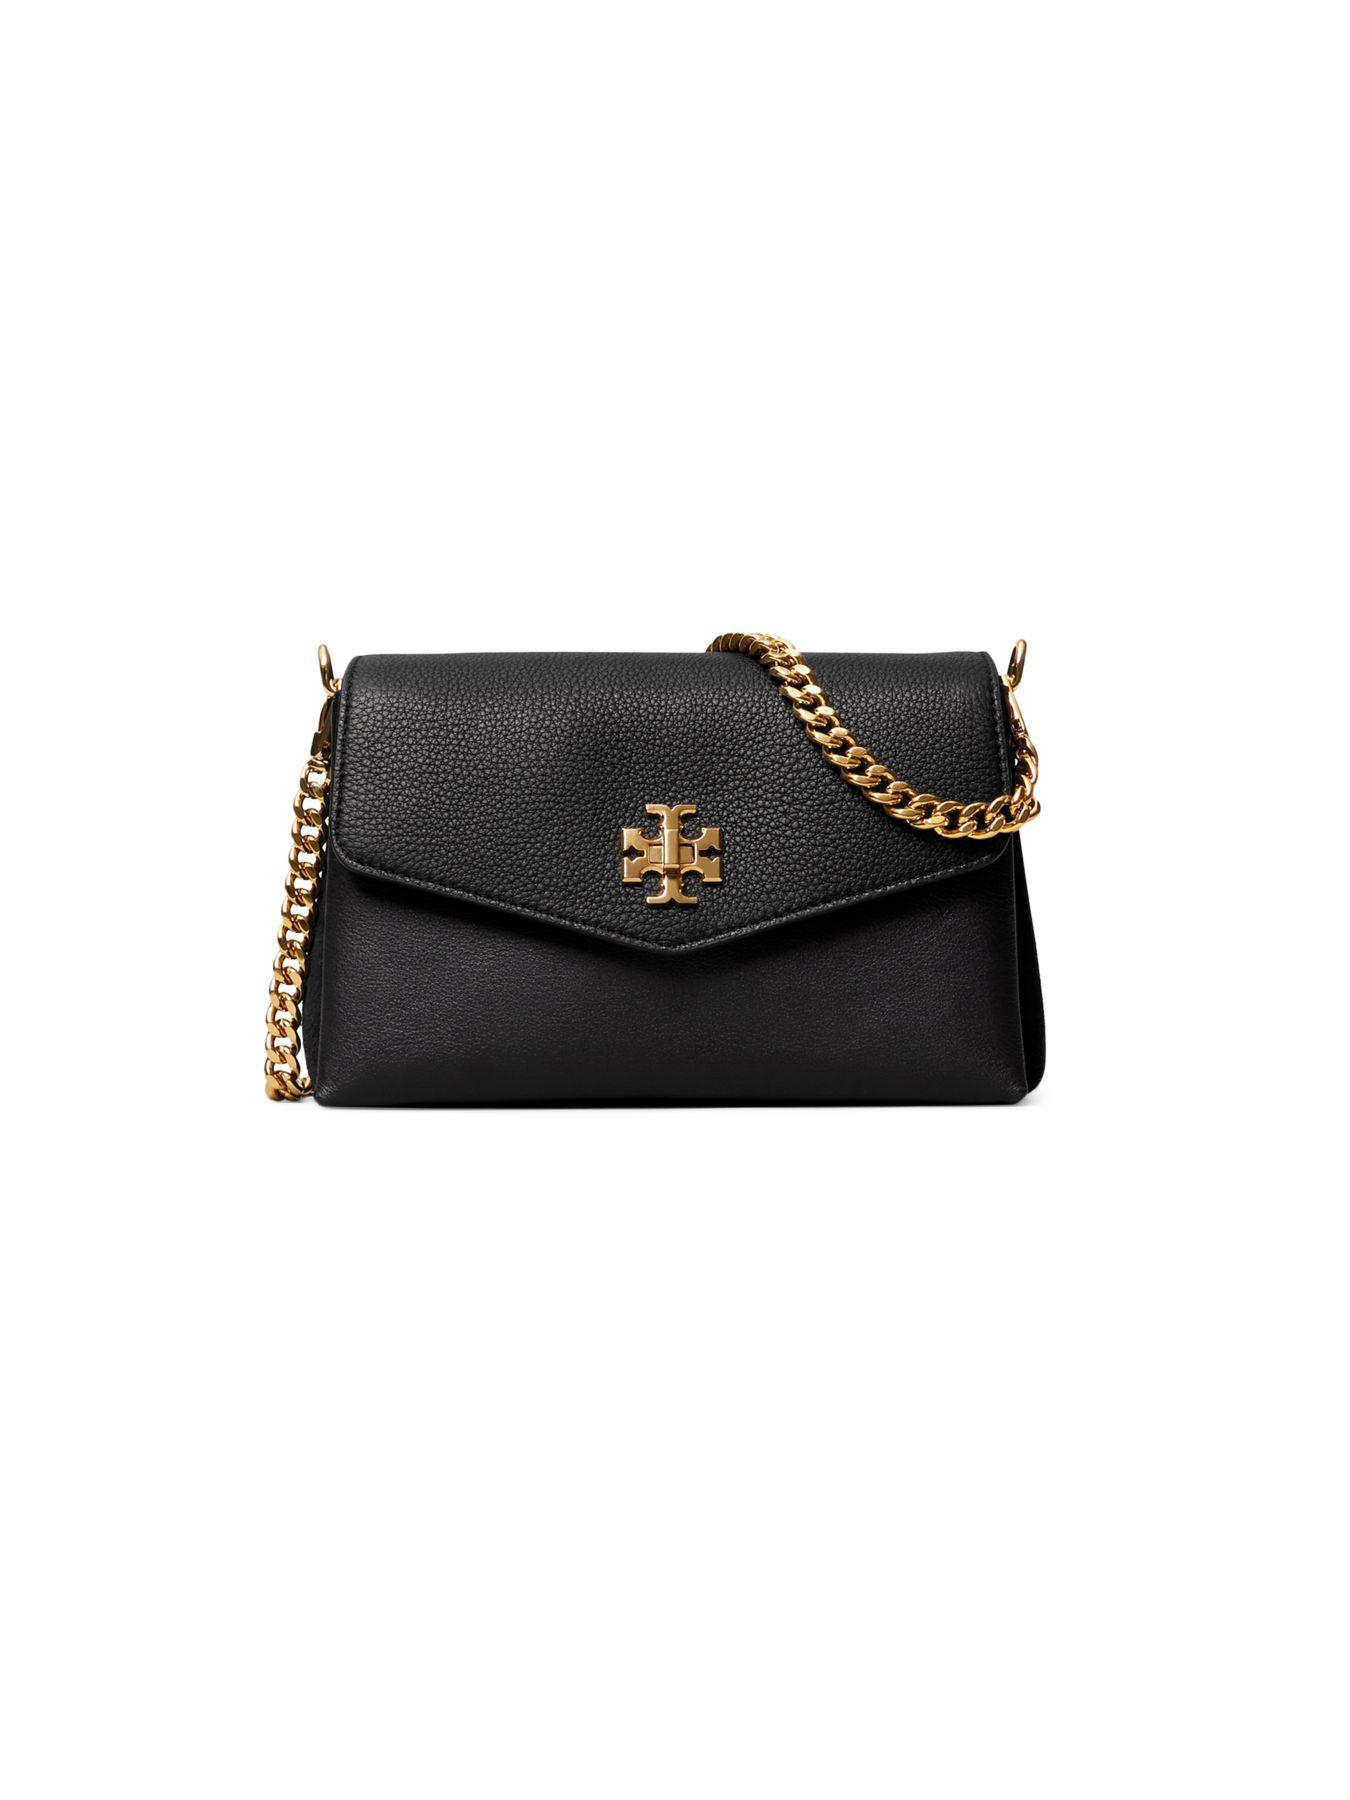 Tory Burch Leather Mini Kira Bag in Black,Gold Tone (Black) | Lyst